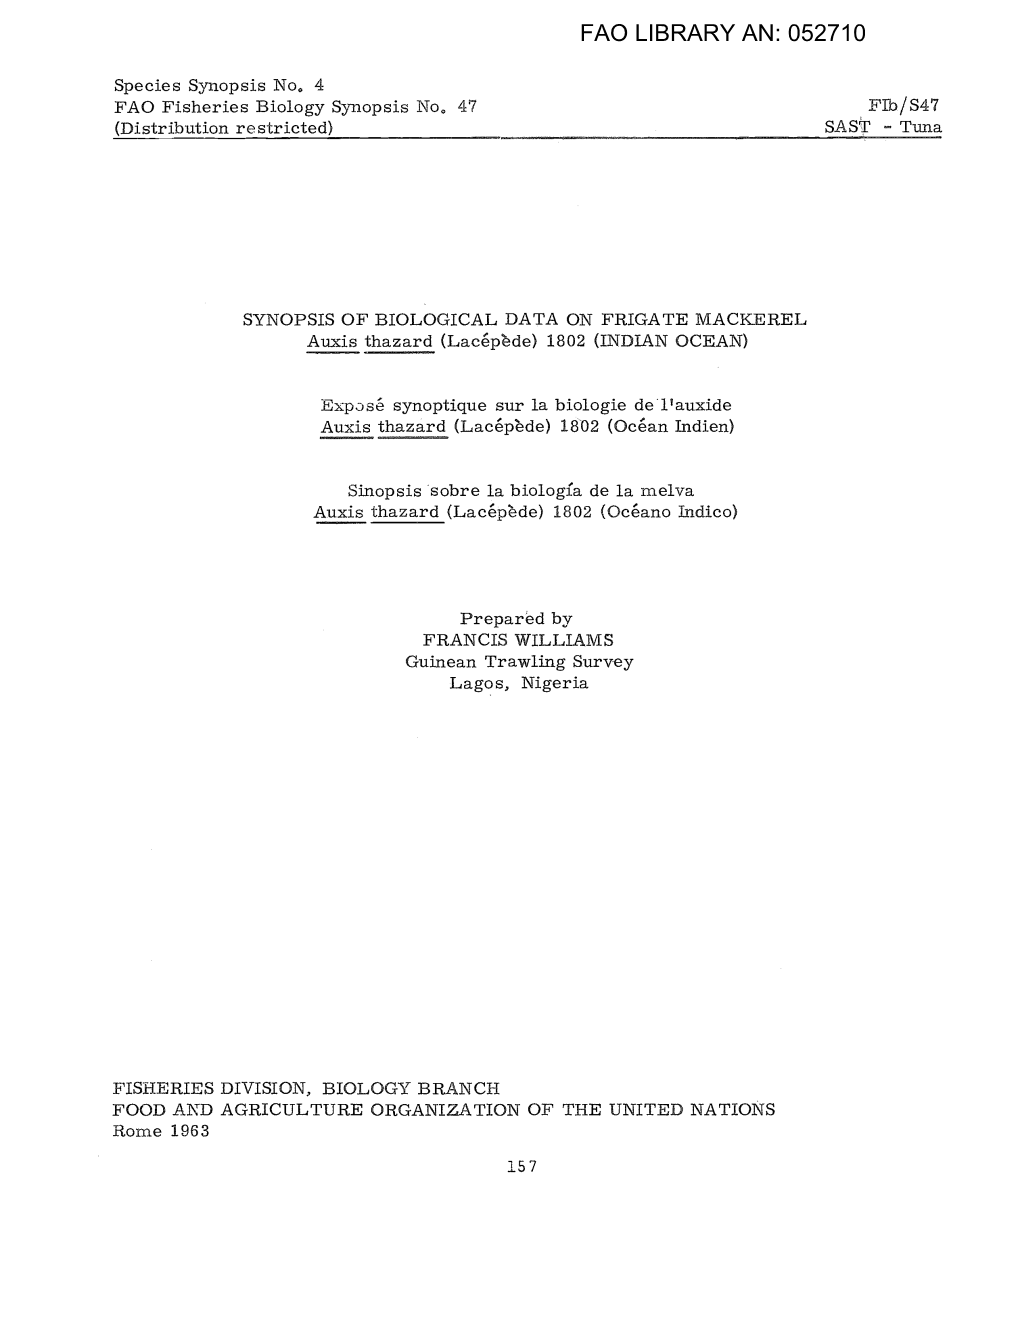 Synopsis of Biological Data on Frigate Mackerel Auxis Thazard (Lacépède